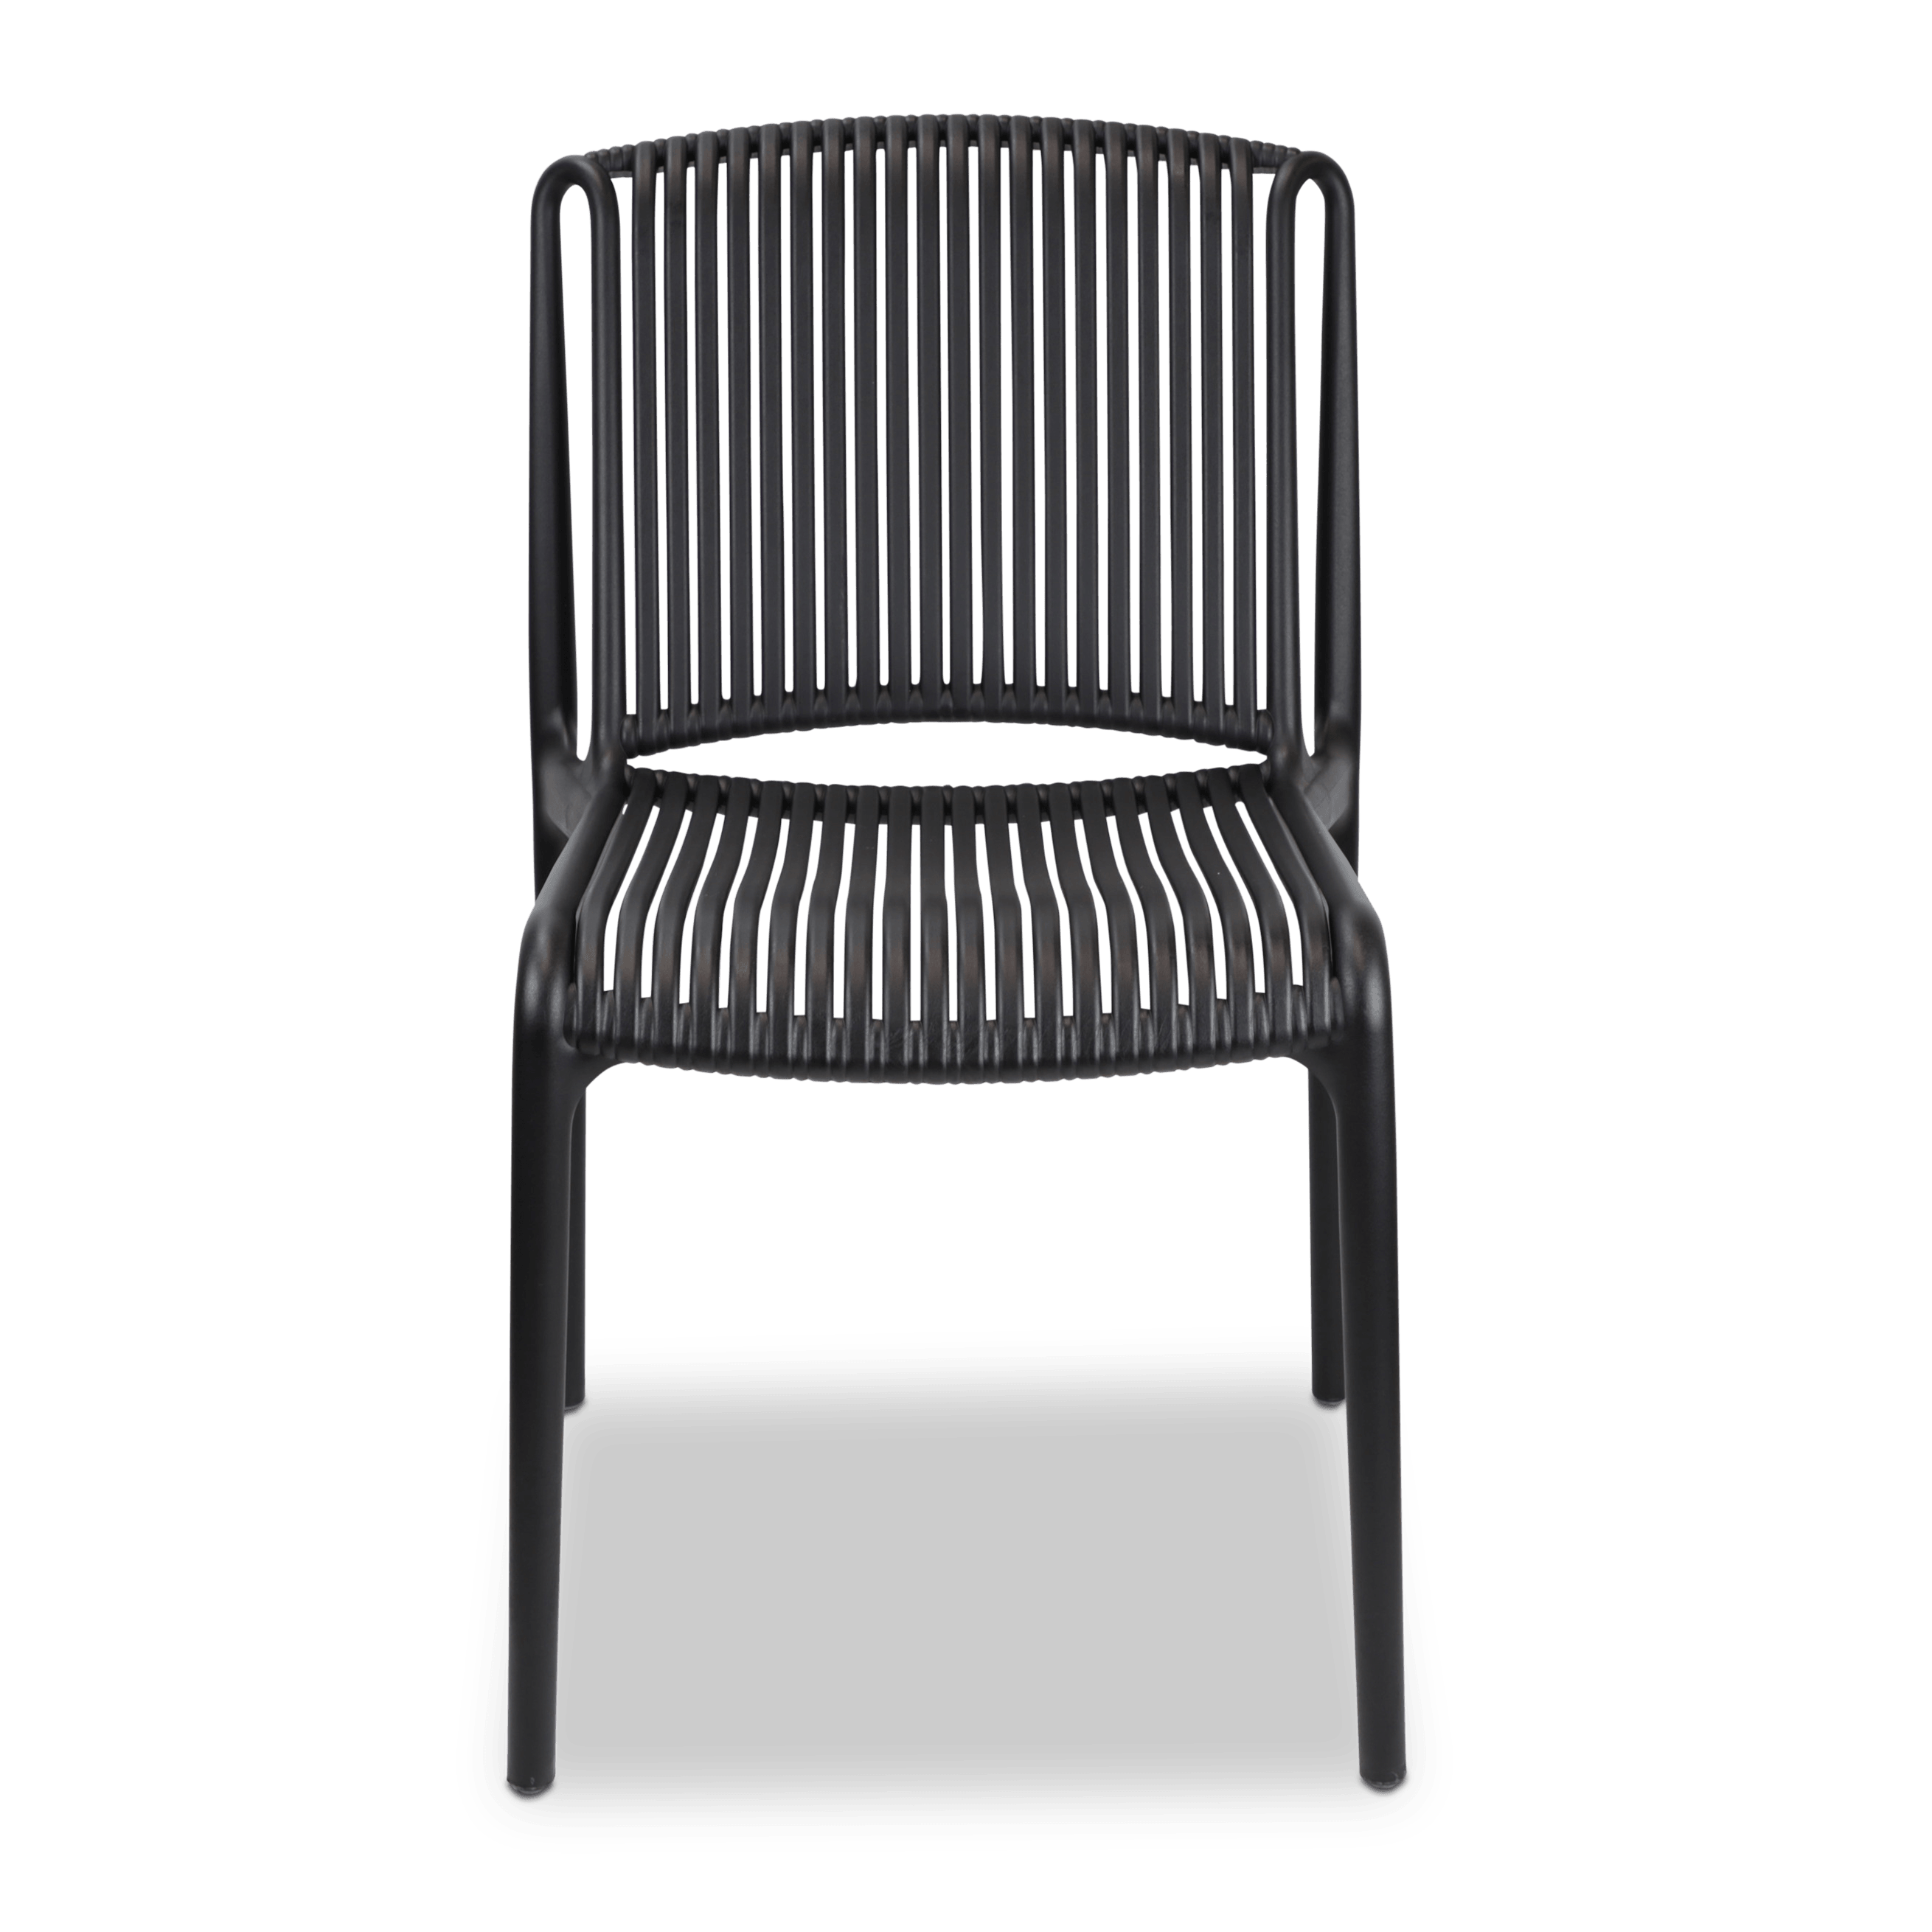 Paros UV Polypropylene Premium Dining Chair in Midnight Black - The Furniture Shack